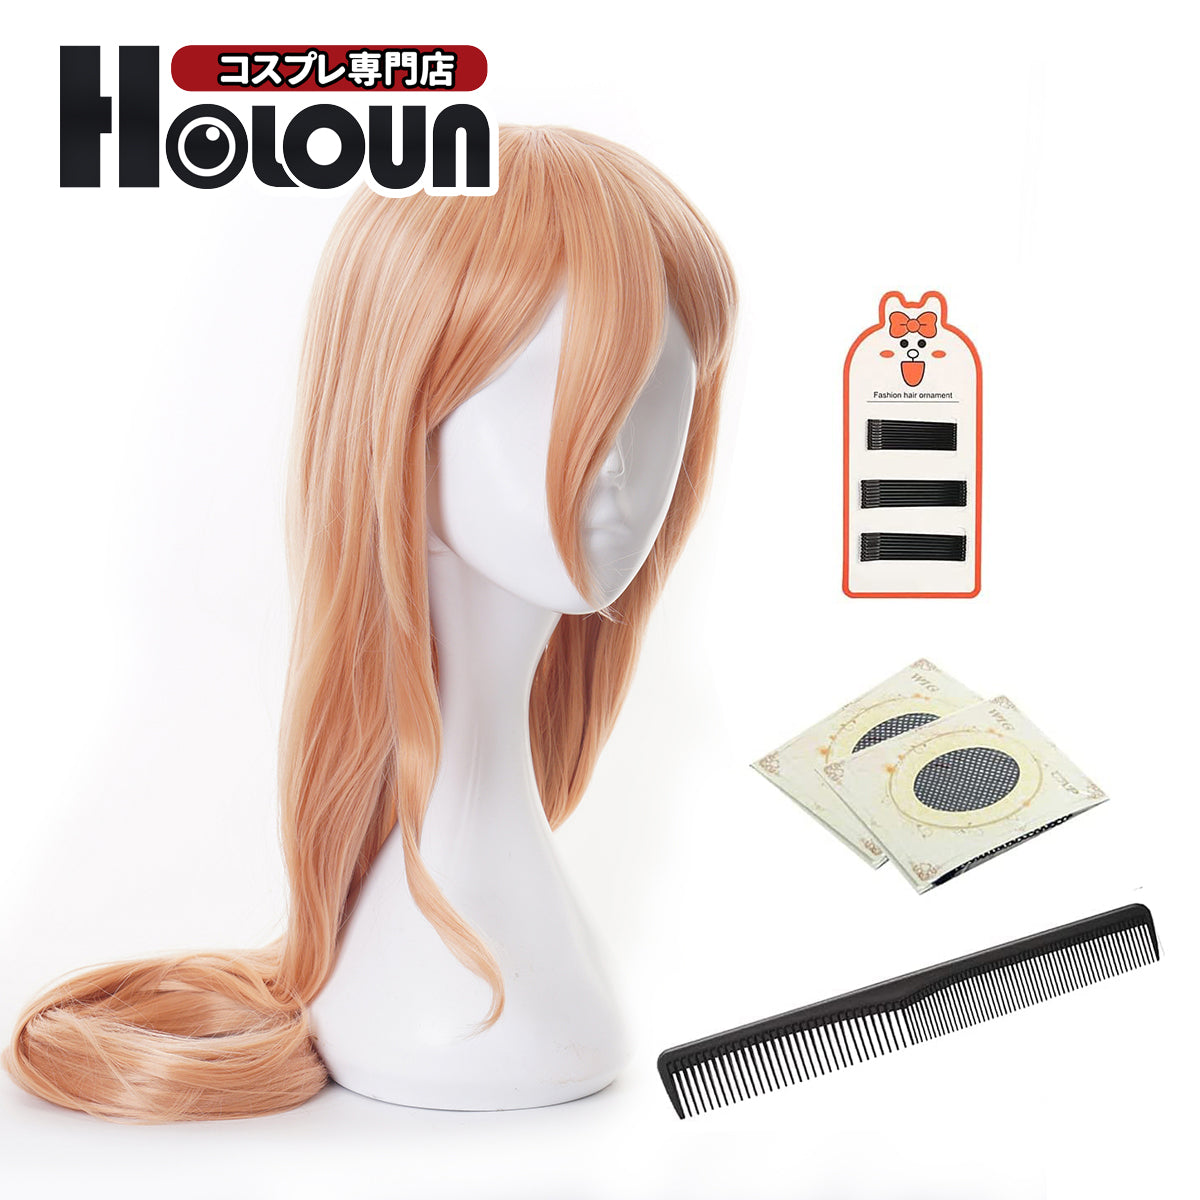 HOLOUN Anime Cosplay Universal Wig For Chainsaw Power Fake Hair Halloween Christmas Party Gift New